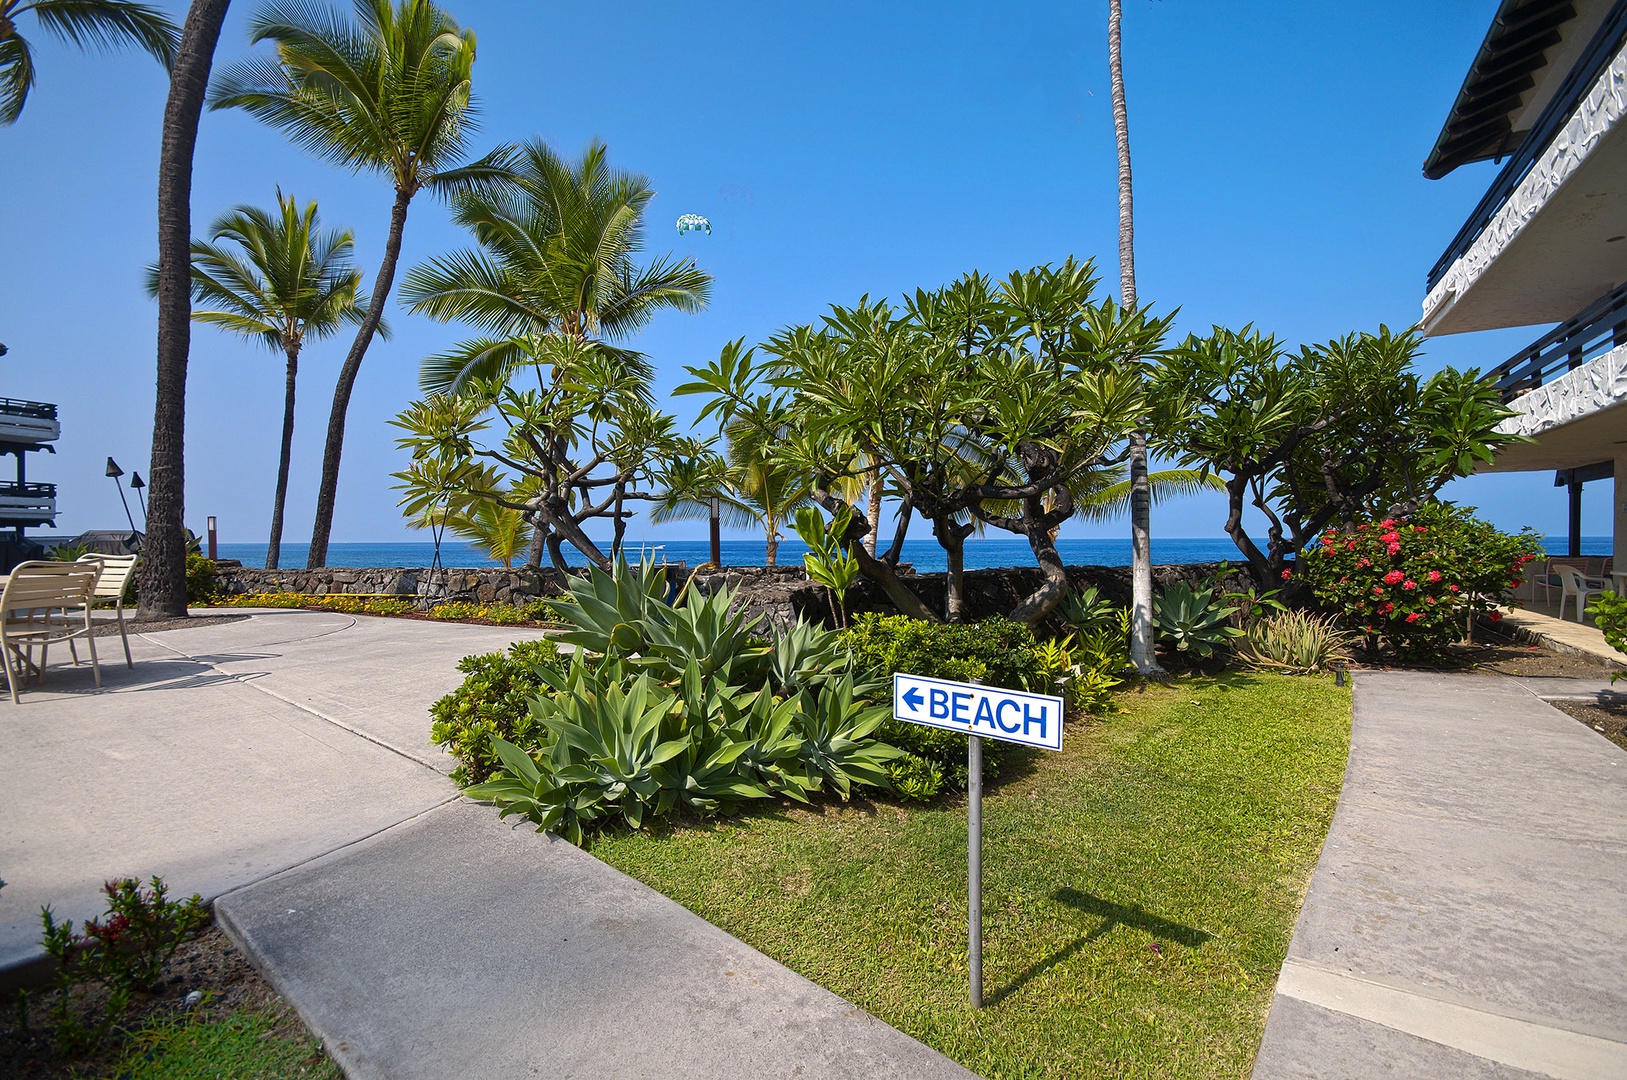 Kailua Kona Vacation Rentals, Casa De Emdeko 336 - Referring to sandy man made beach